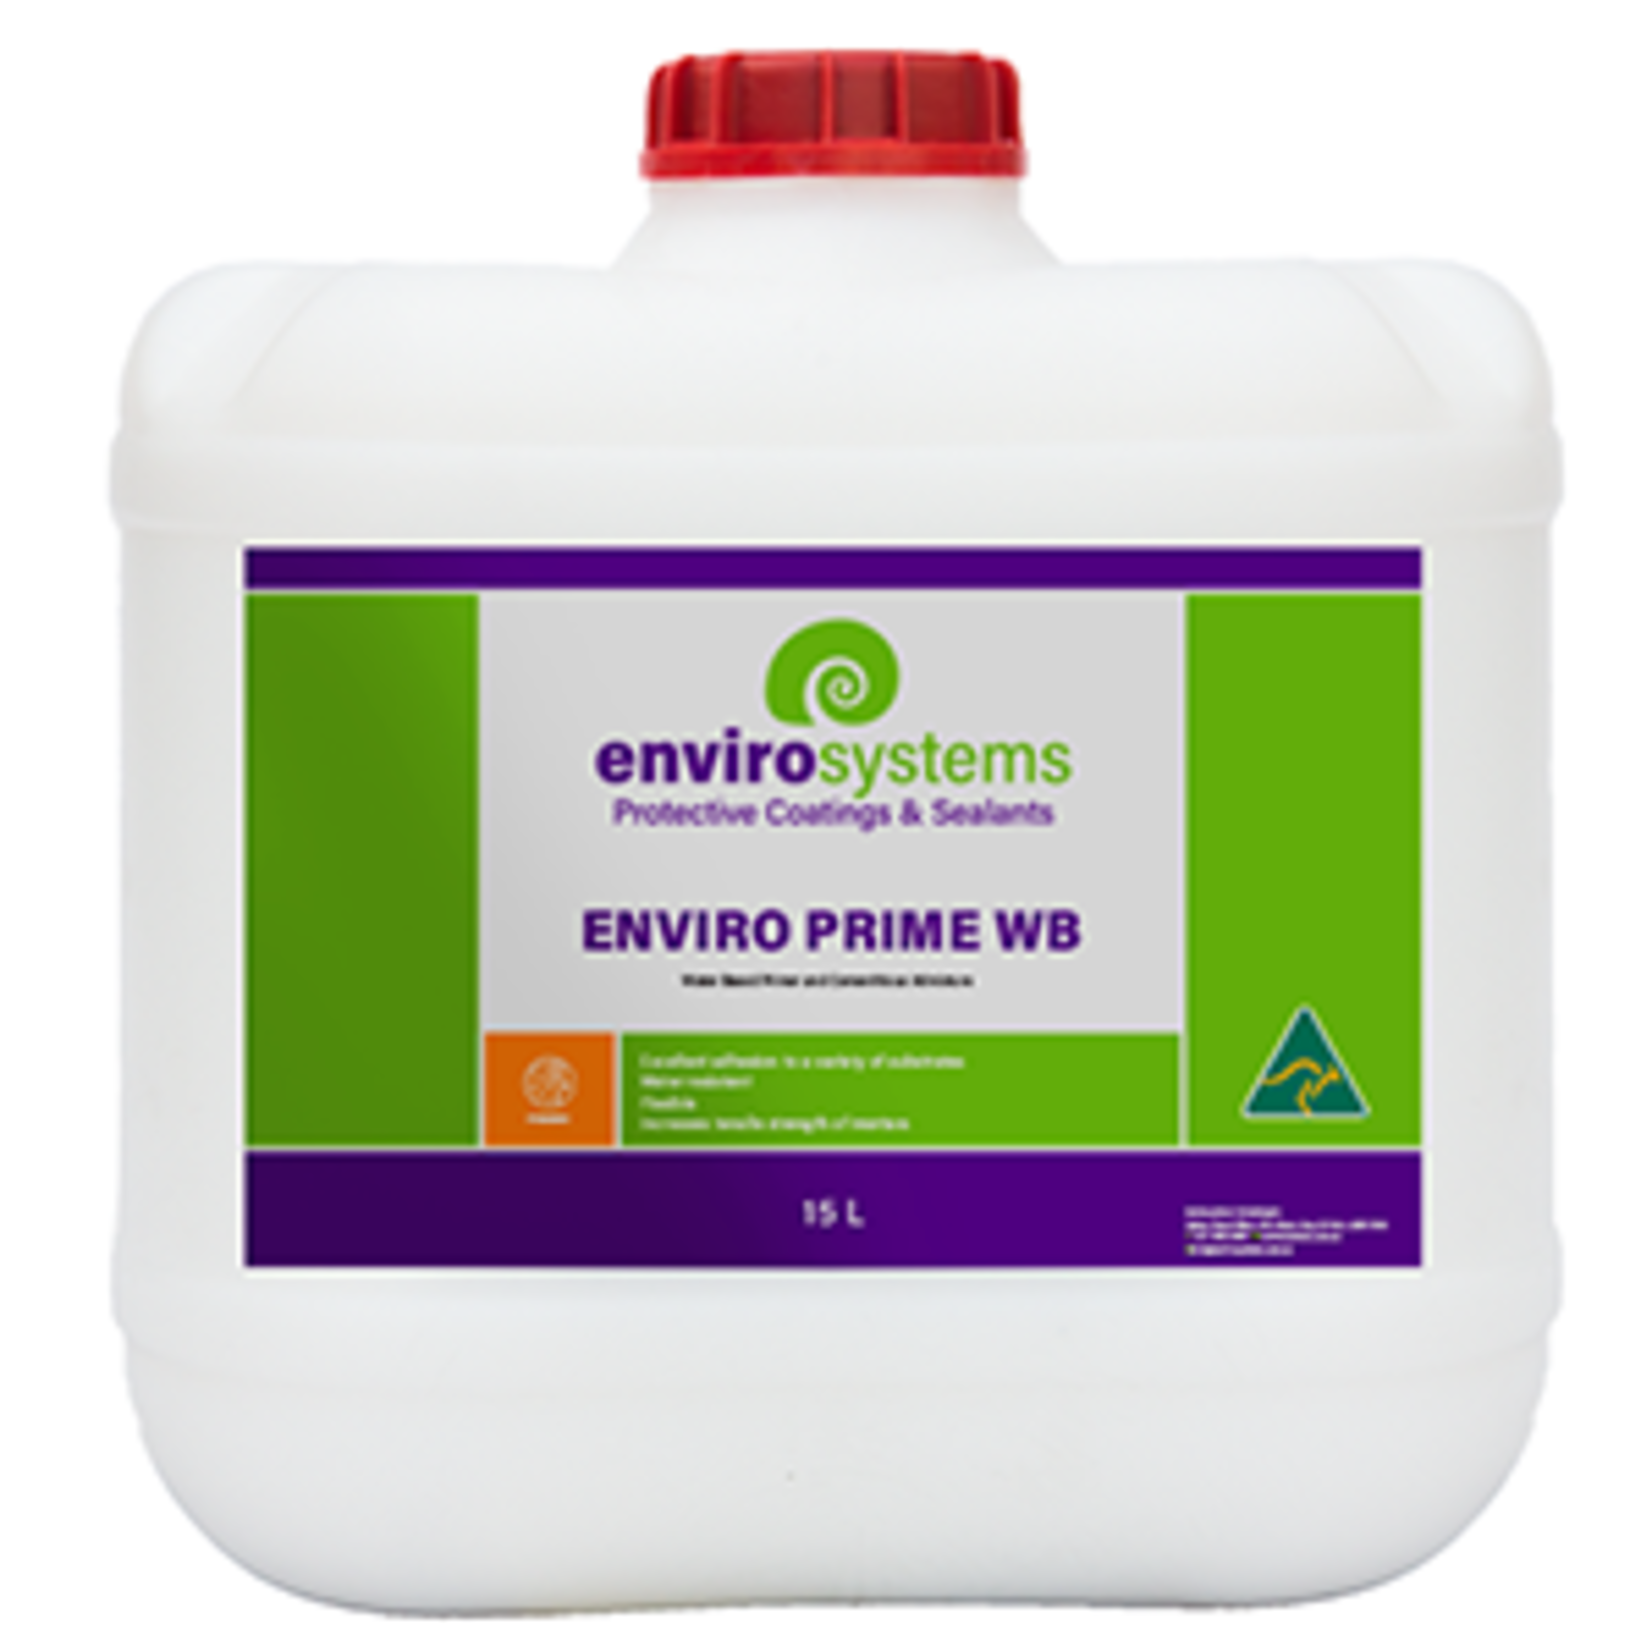 Enviro Systems WB Prime water based primer 15L